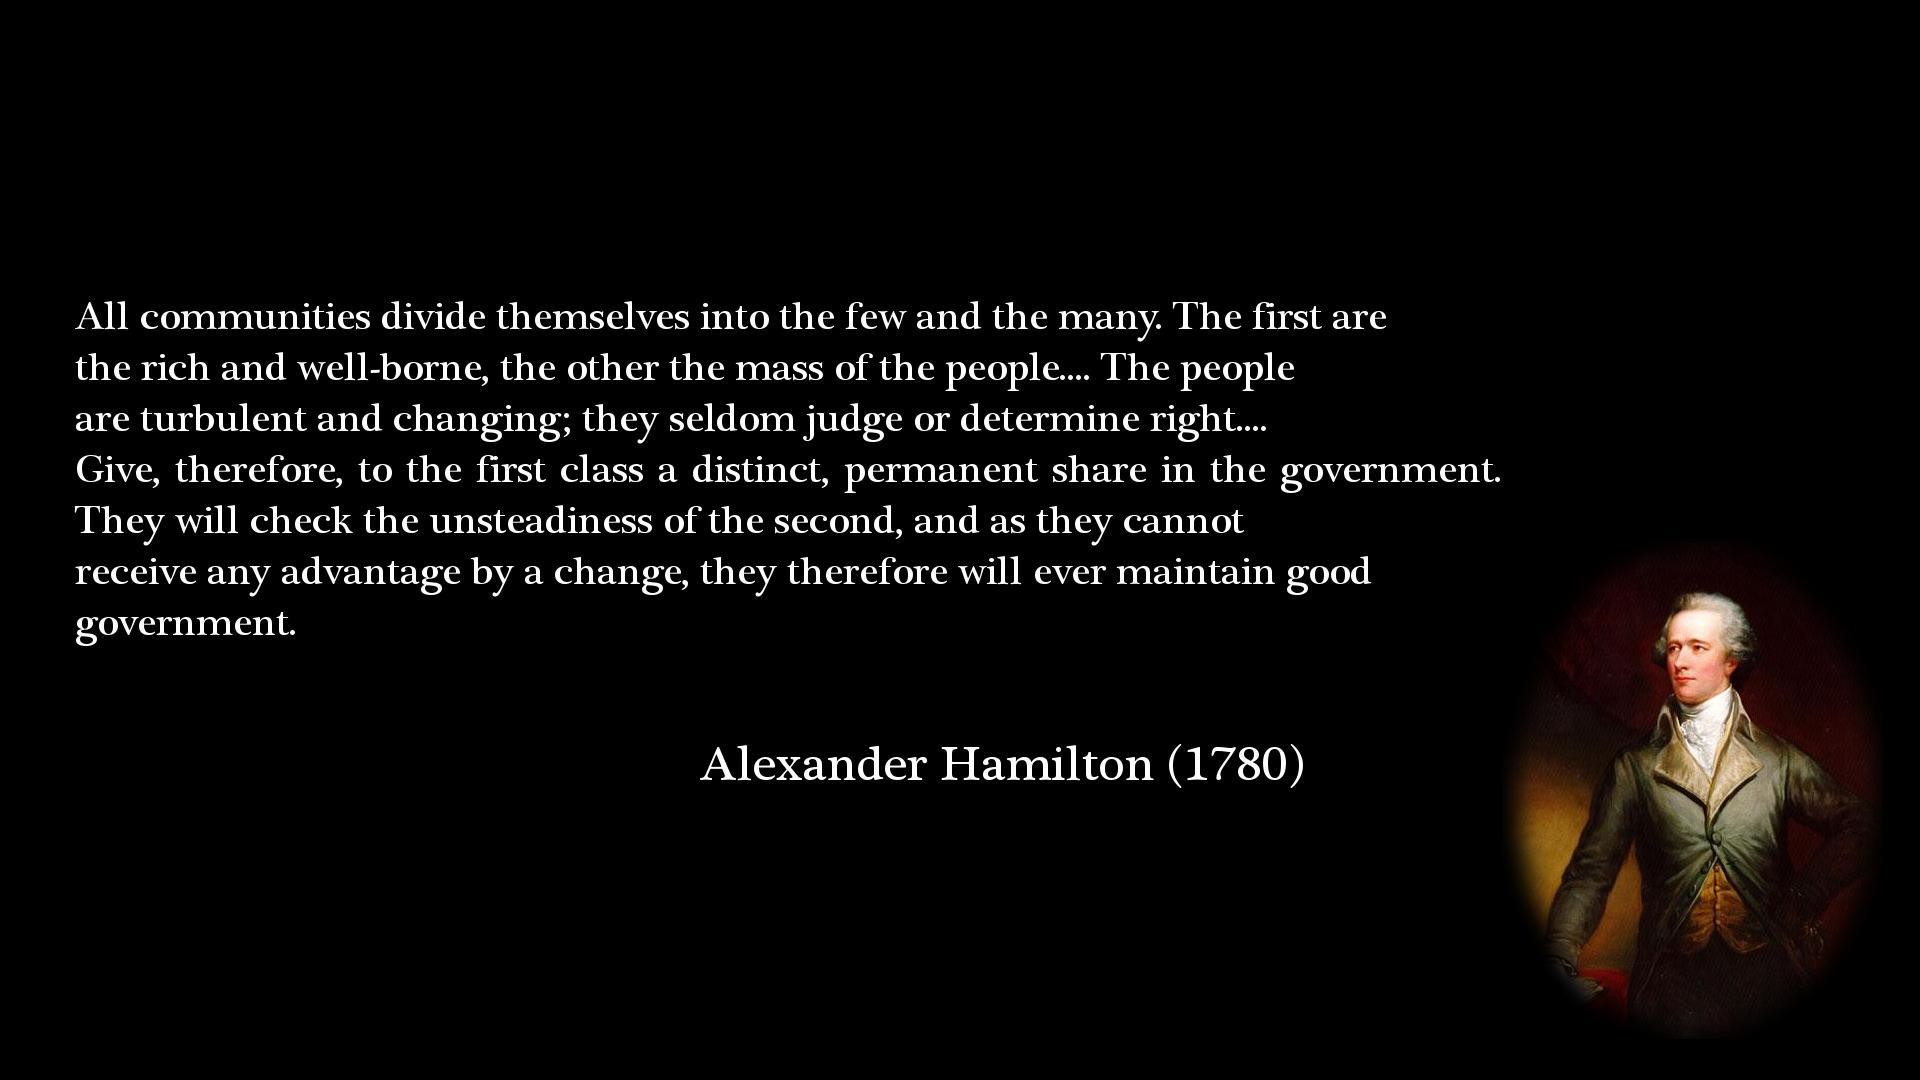 1920x1080 Alexander Hamilton Quotes Wallpaper Image Gallery - HCPR